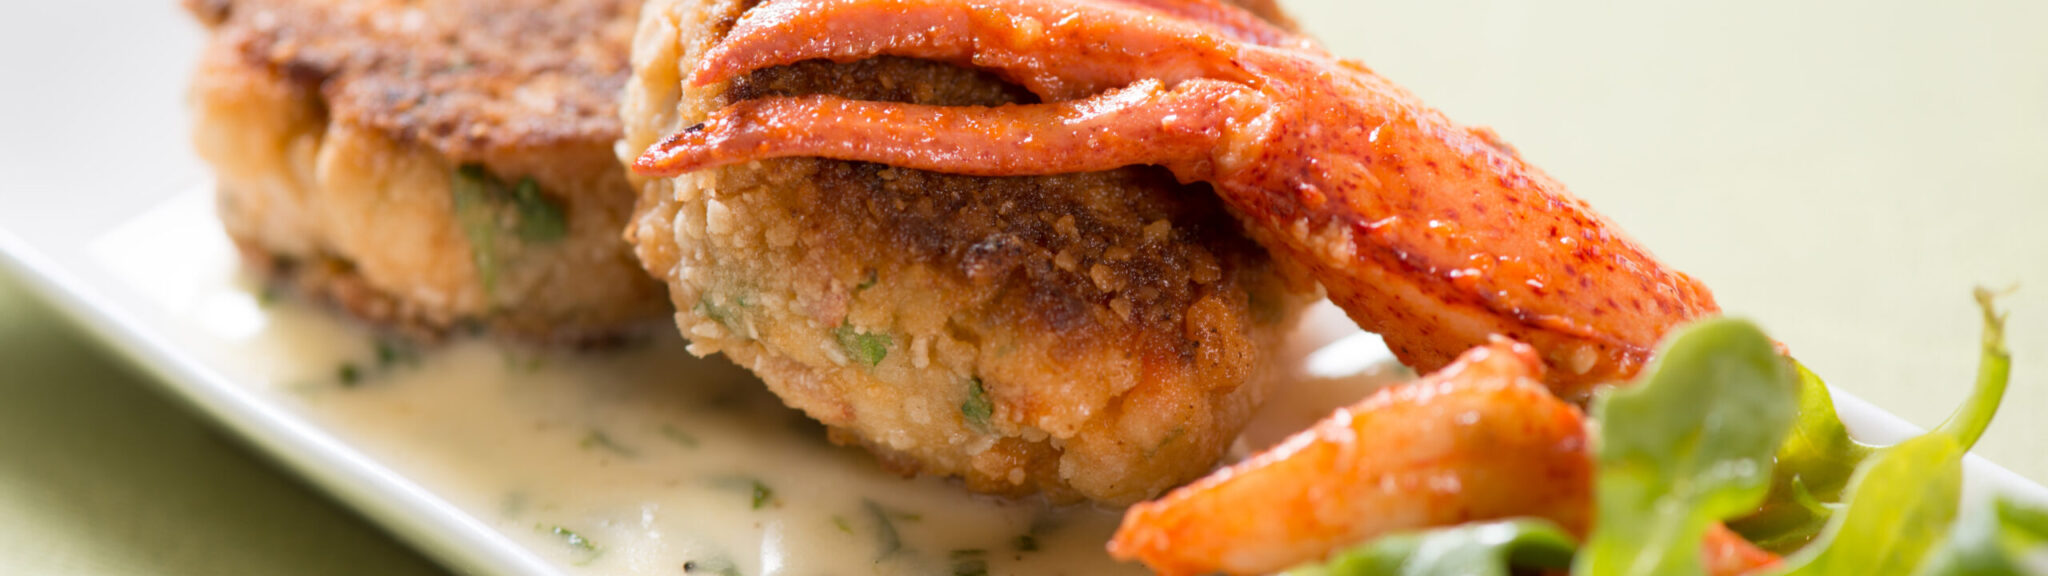 Asian Maine Lobster Cakes with Tarragon Aioli recipe image